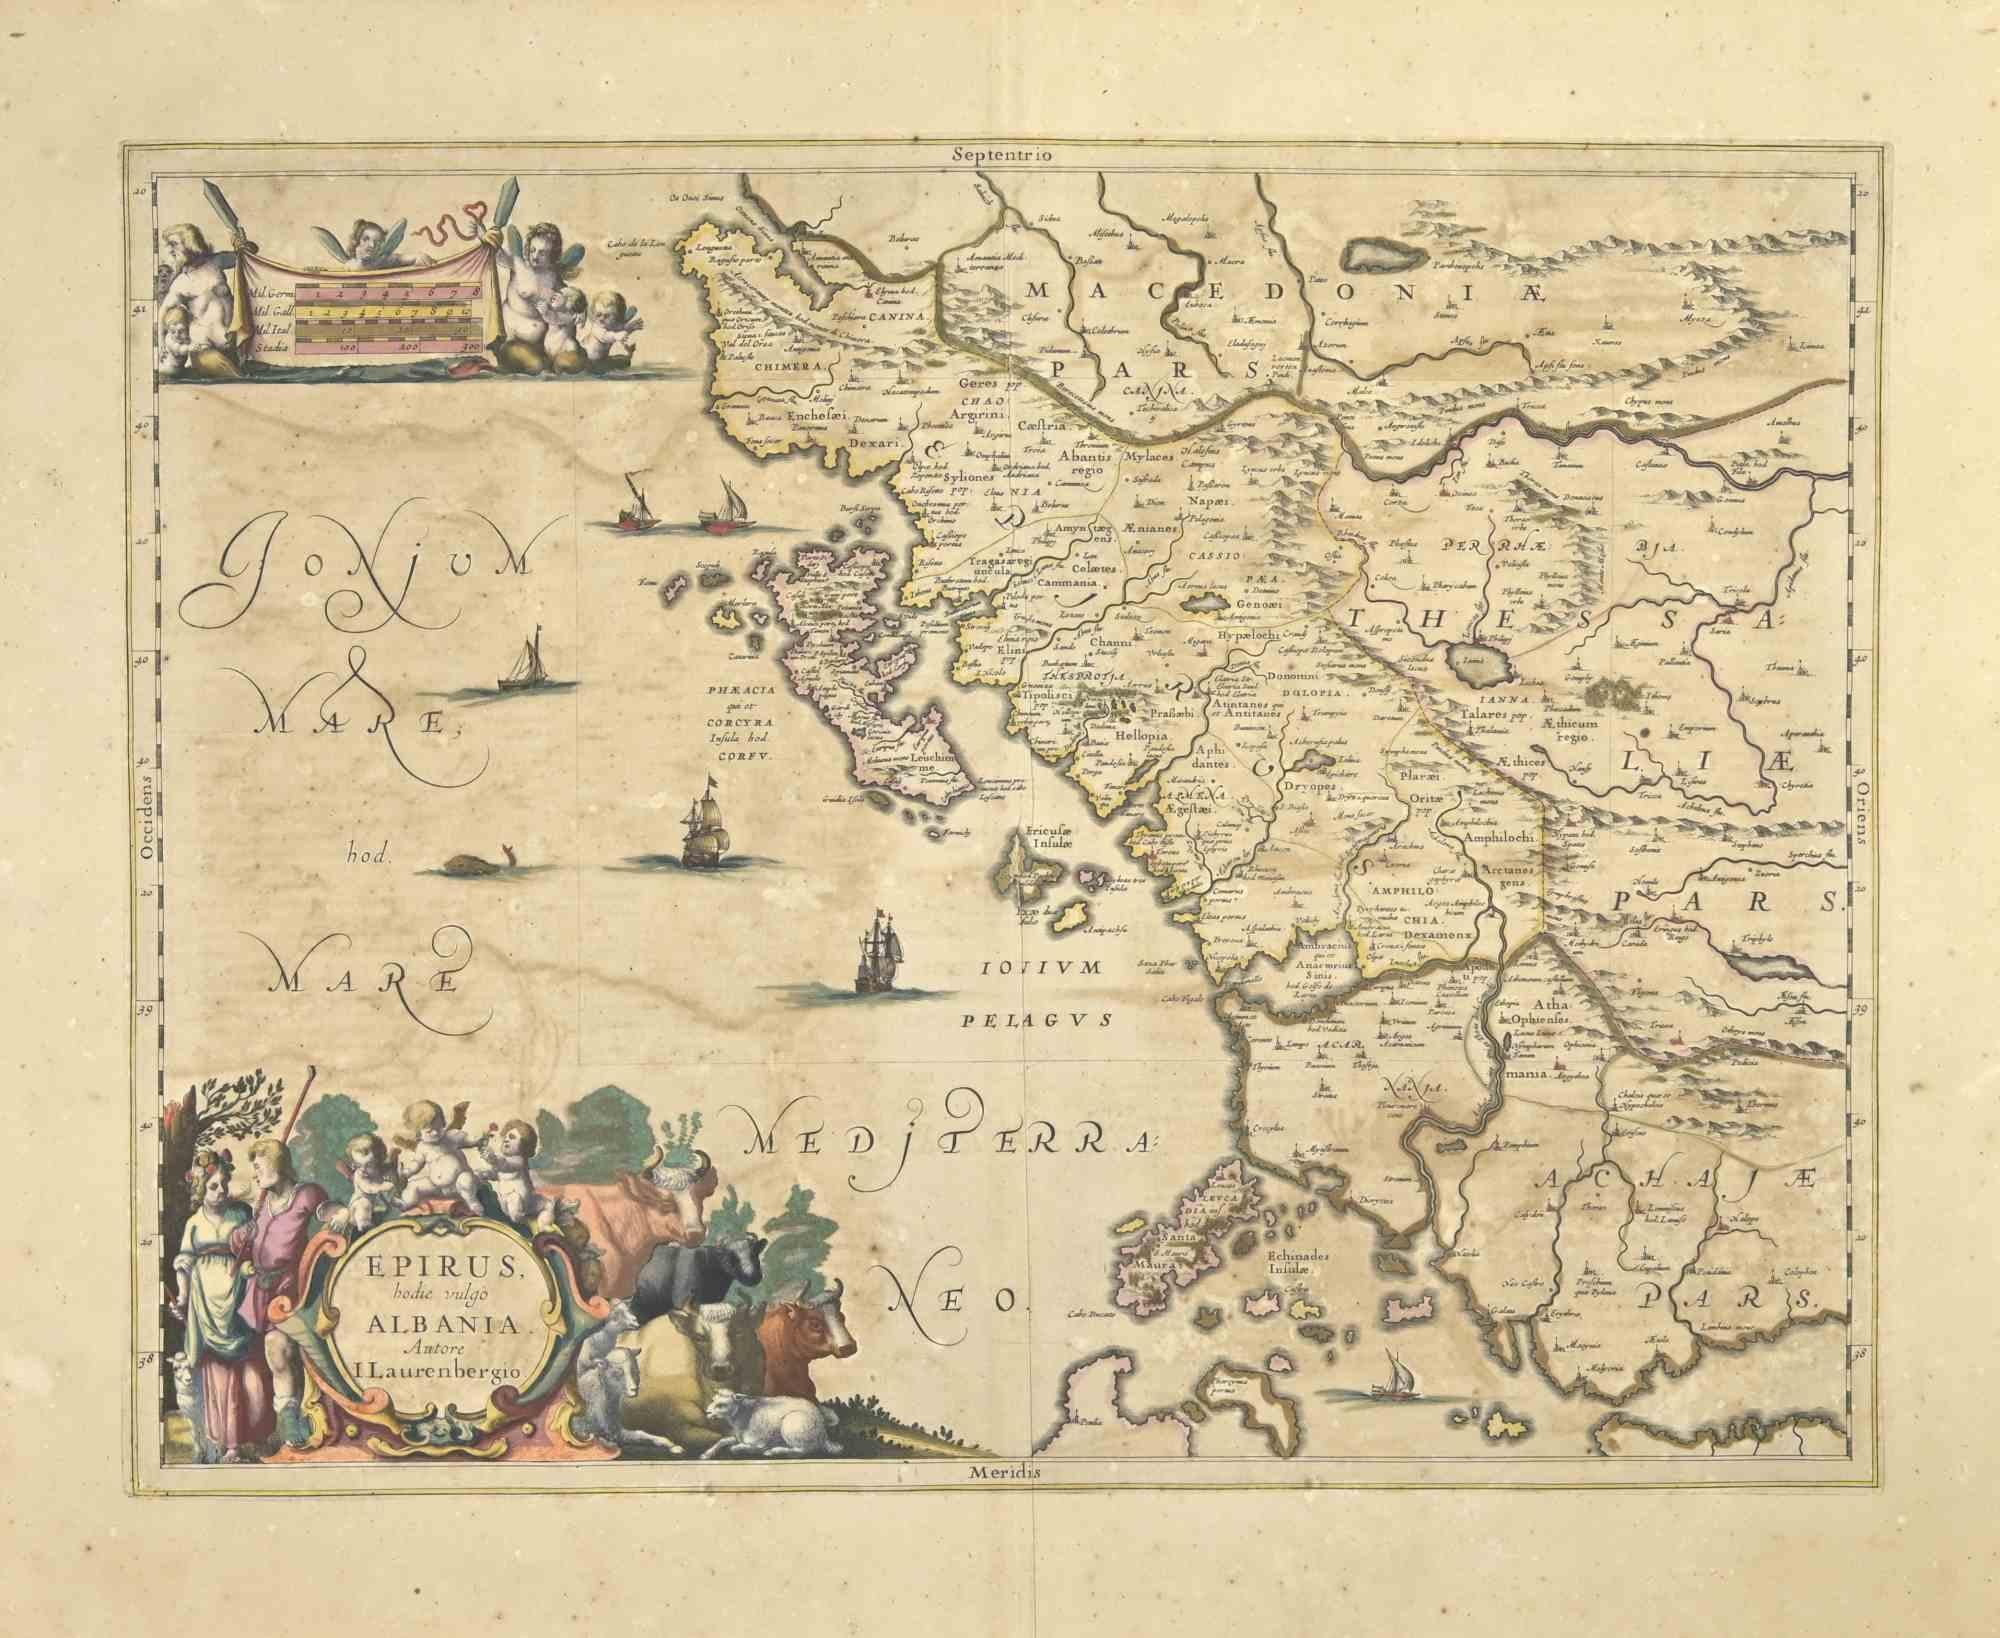 Epirus Albania is an ancient map realized in 1650 by Johannes Janssonius (1588-1664).

Good conditions.

From Atlantis majoris quinta pars, Orbem maritimum [Novus Atlas, volume V: carte marittime]. Amsterdam: Janssonius, 1650. Technique is etching